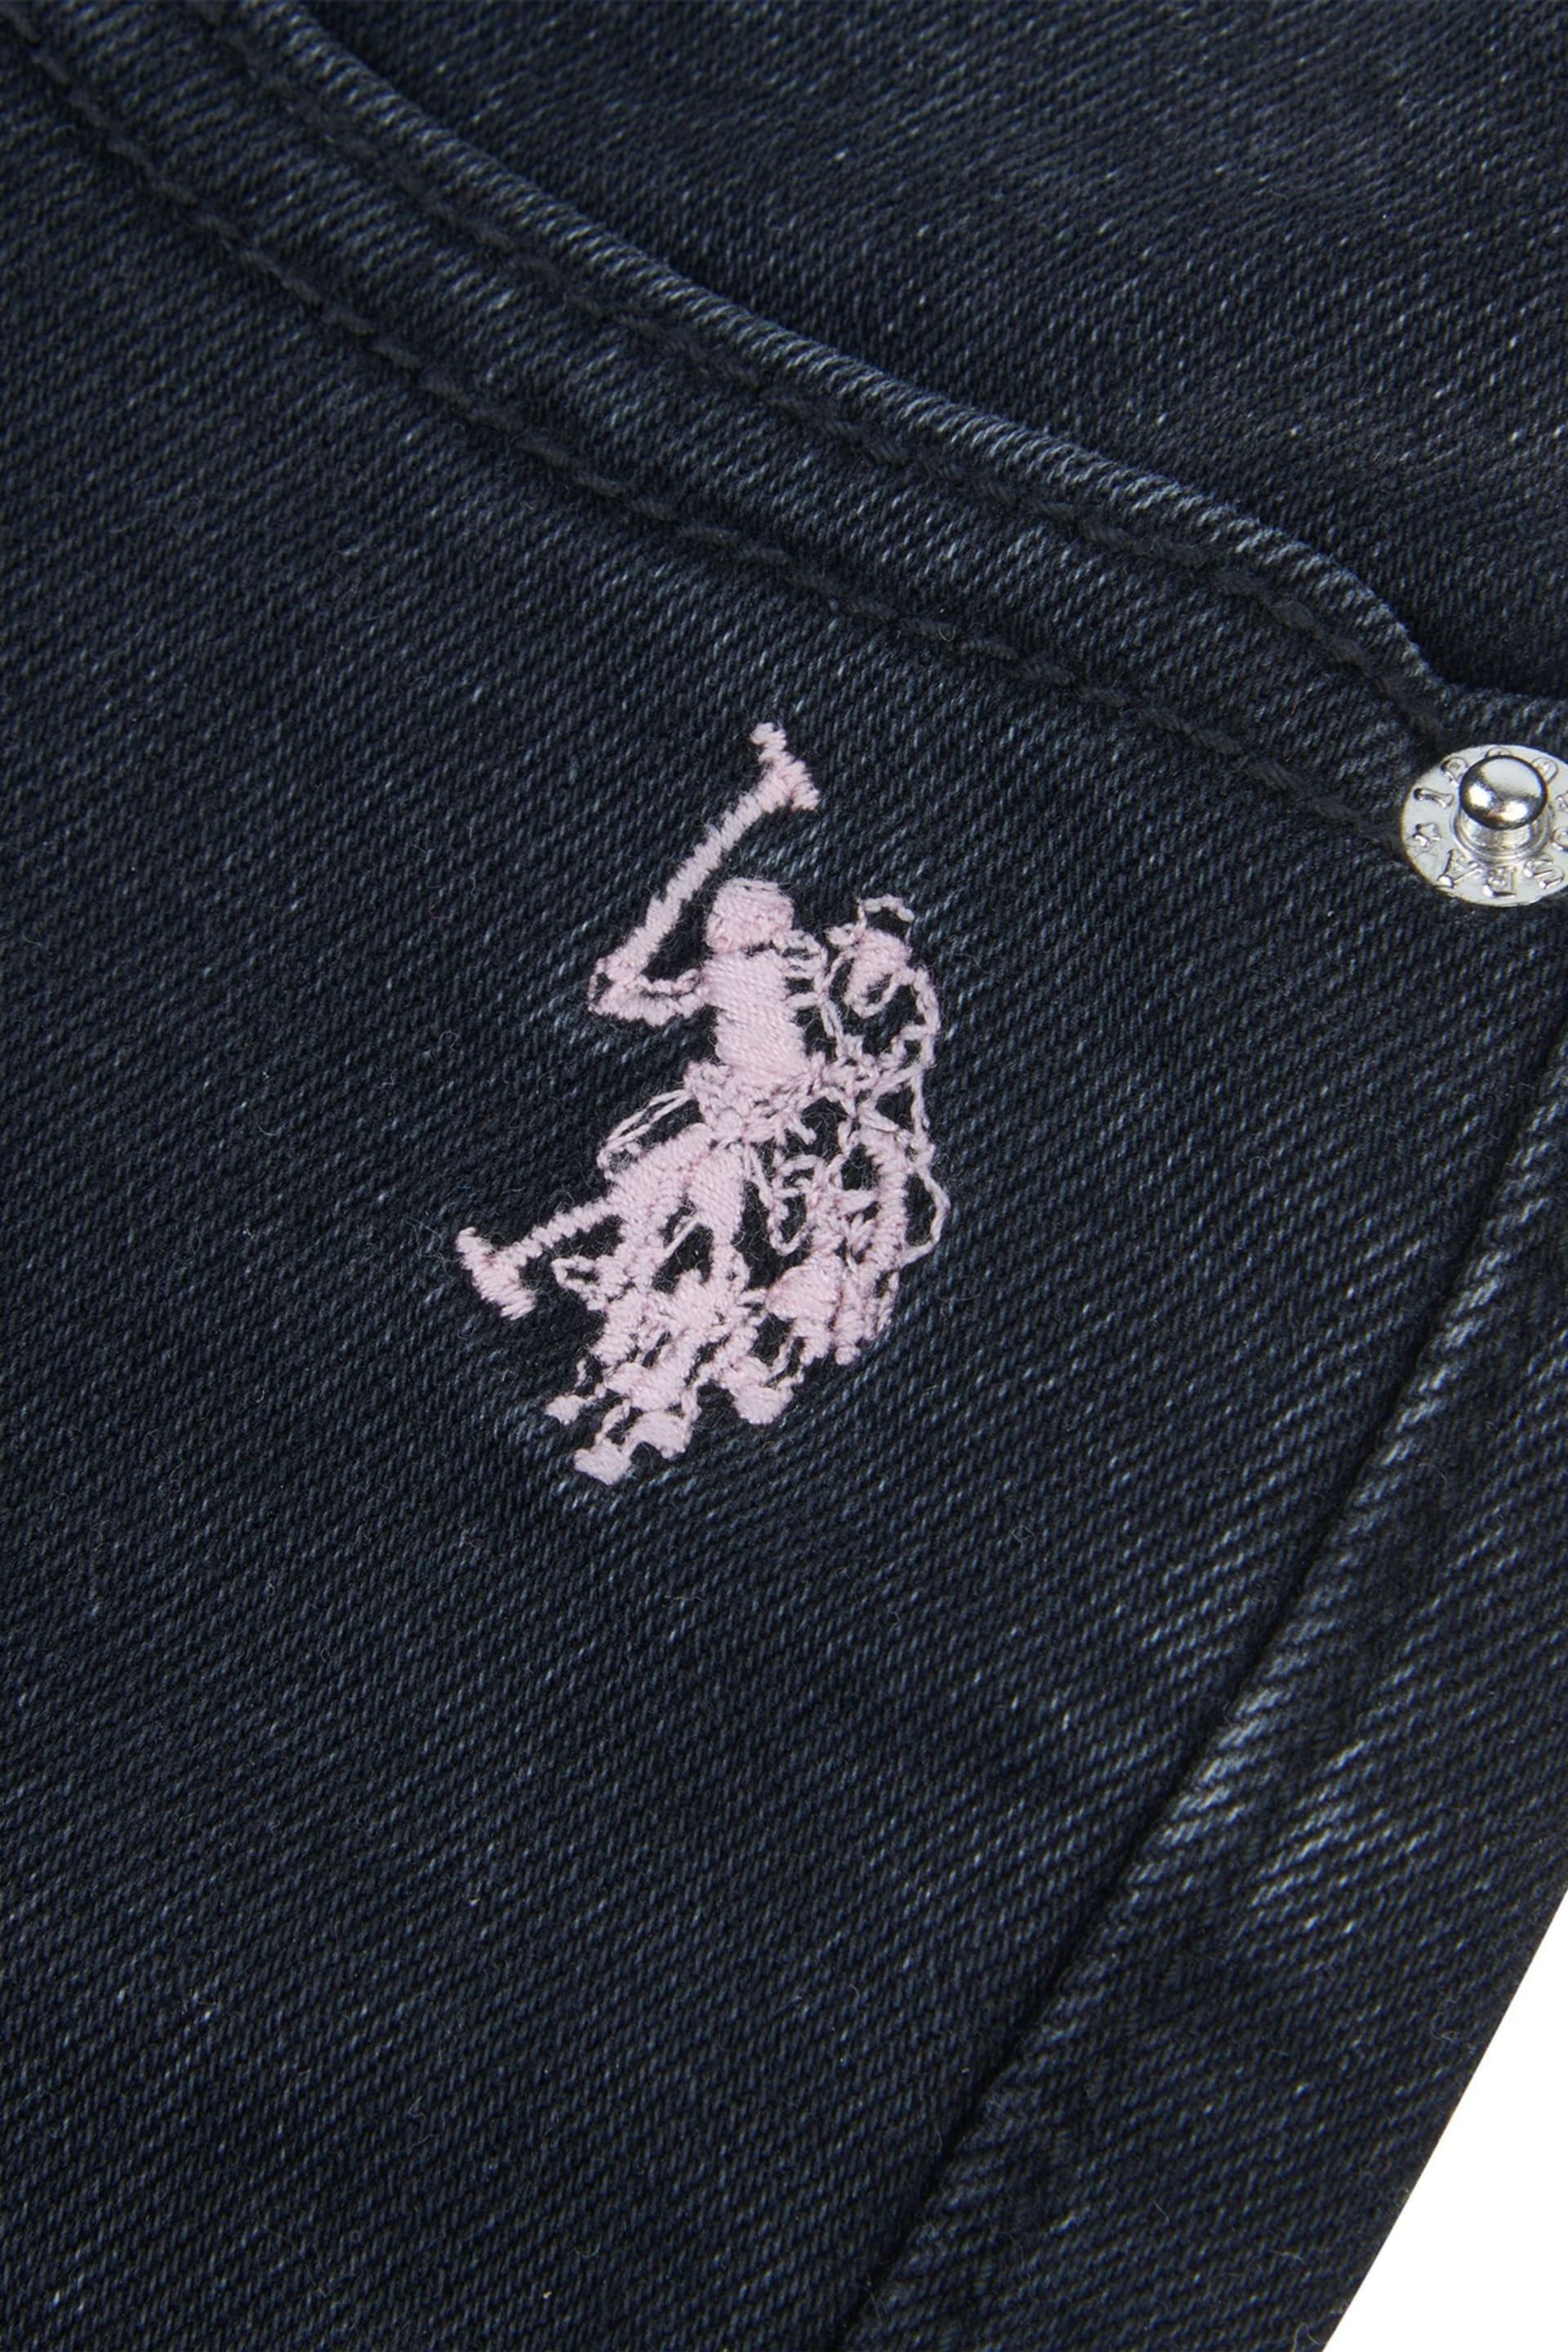 U.S. Polo Assn. Girls Black Coloured Bootleg Denim Jeans - Image 6 of 6